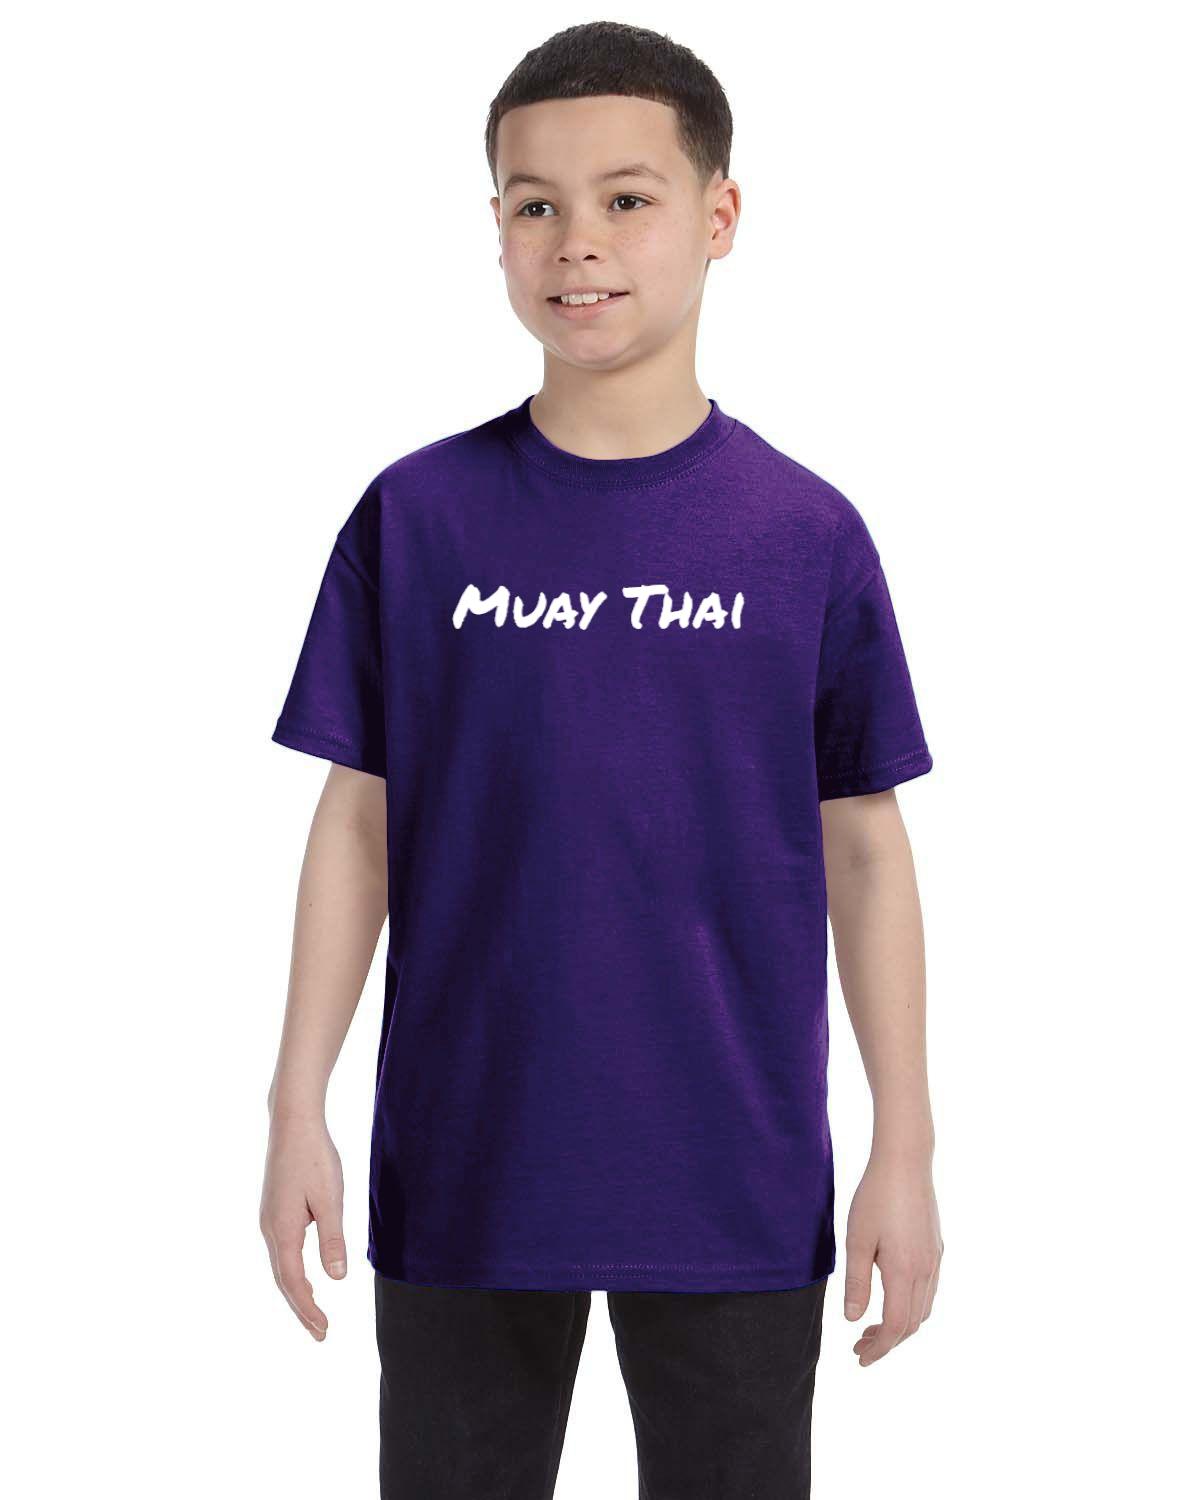 Muay Thai Kids T-Shirt